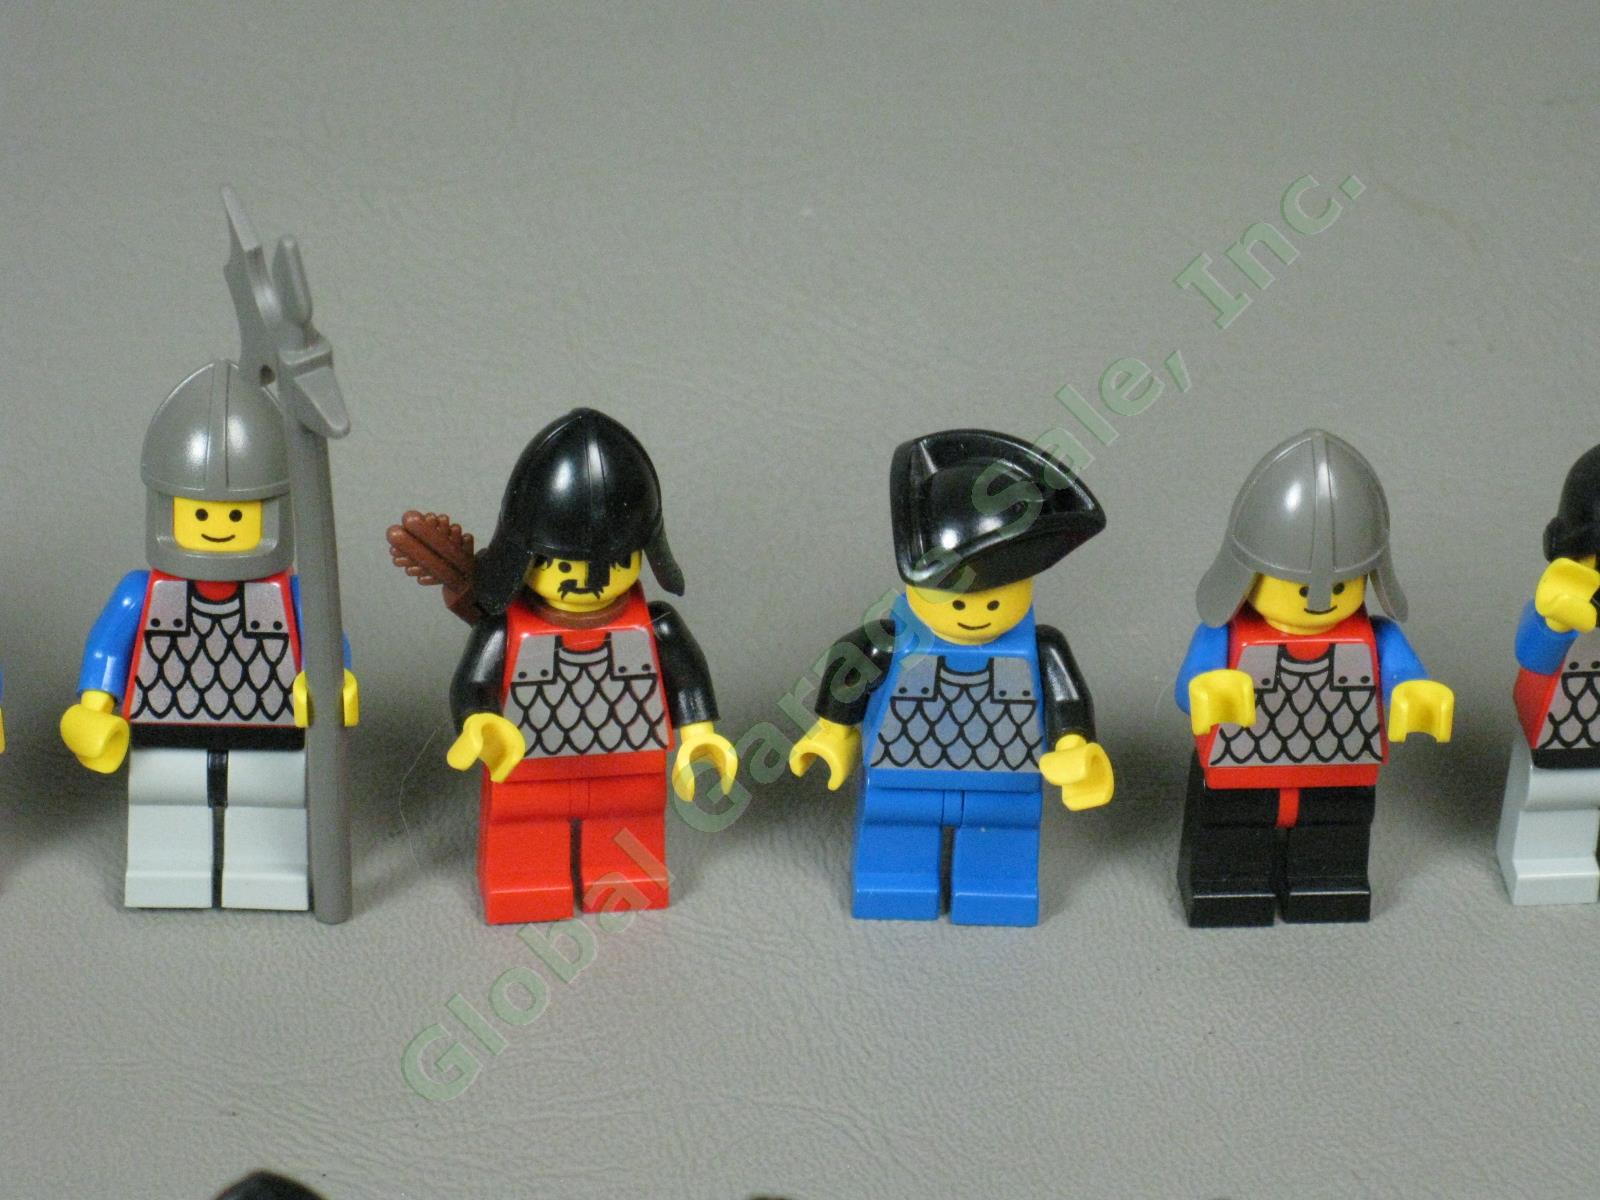 HUGE Lot 45 Lego Medieval Fright Knight Figure Minifigure Castle Armor Extra Set 5